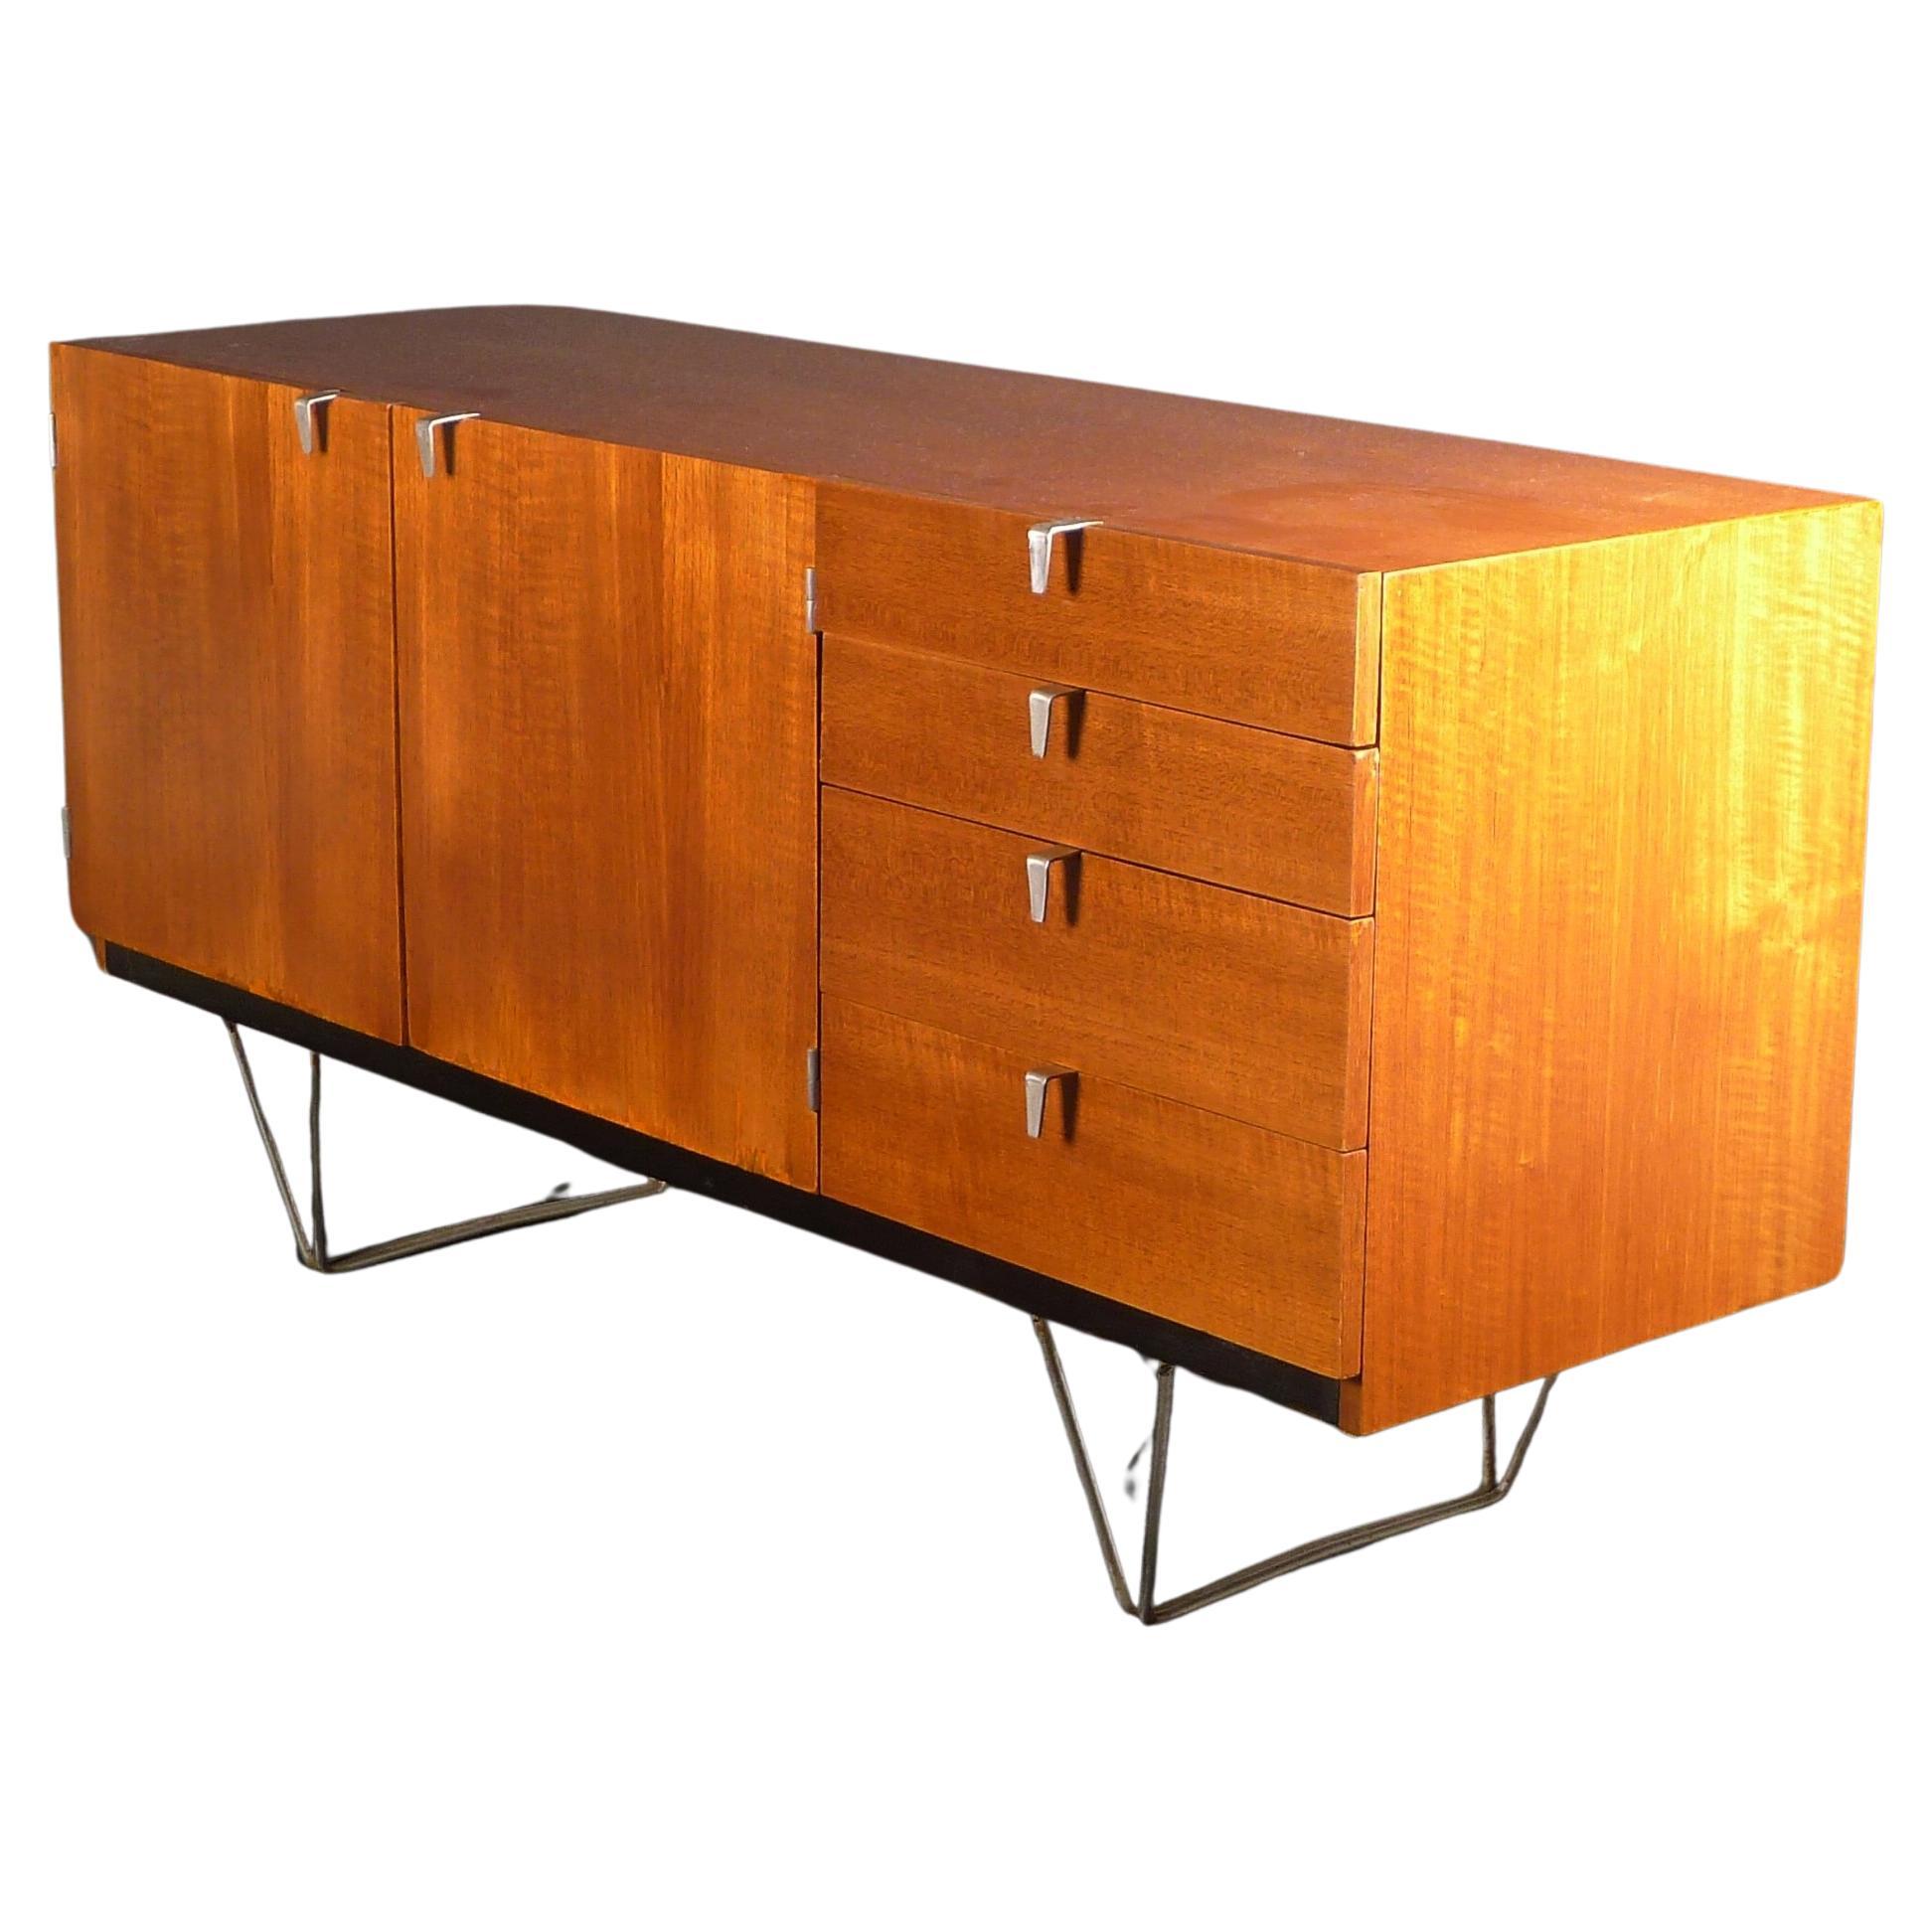 John & Sylvia Reid, Modell S201 Sideboard aus Teakholz, für Stag Furniture, 1960er Jahre